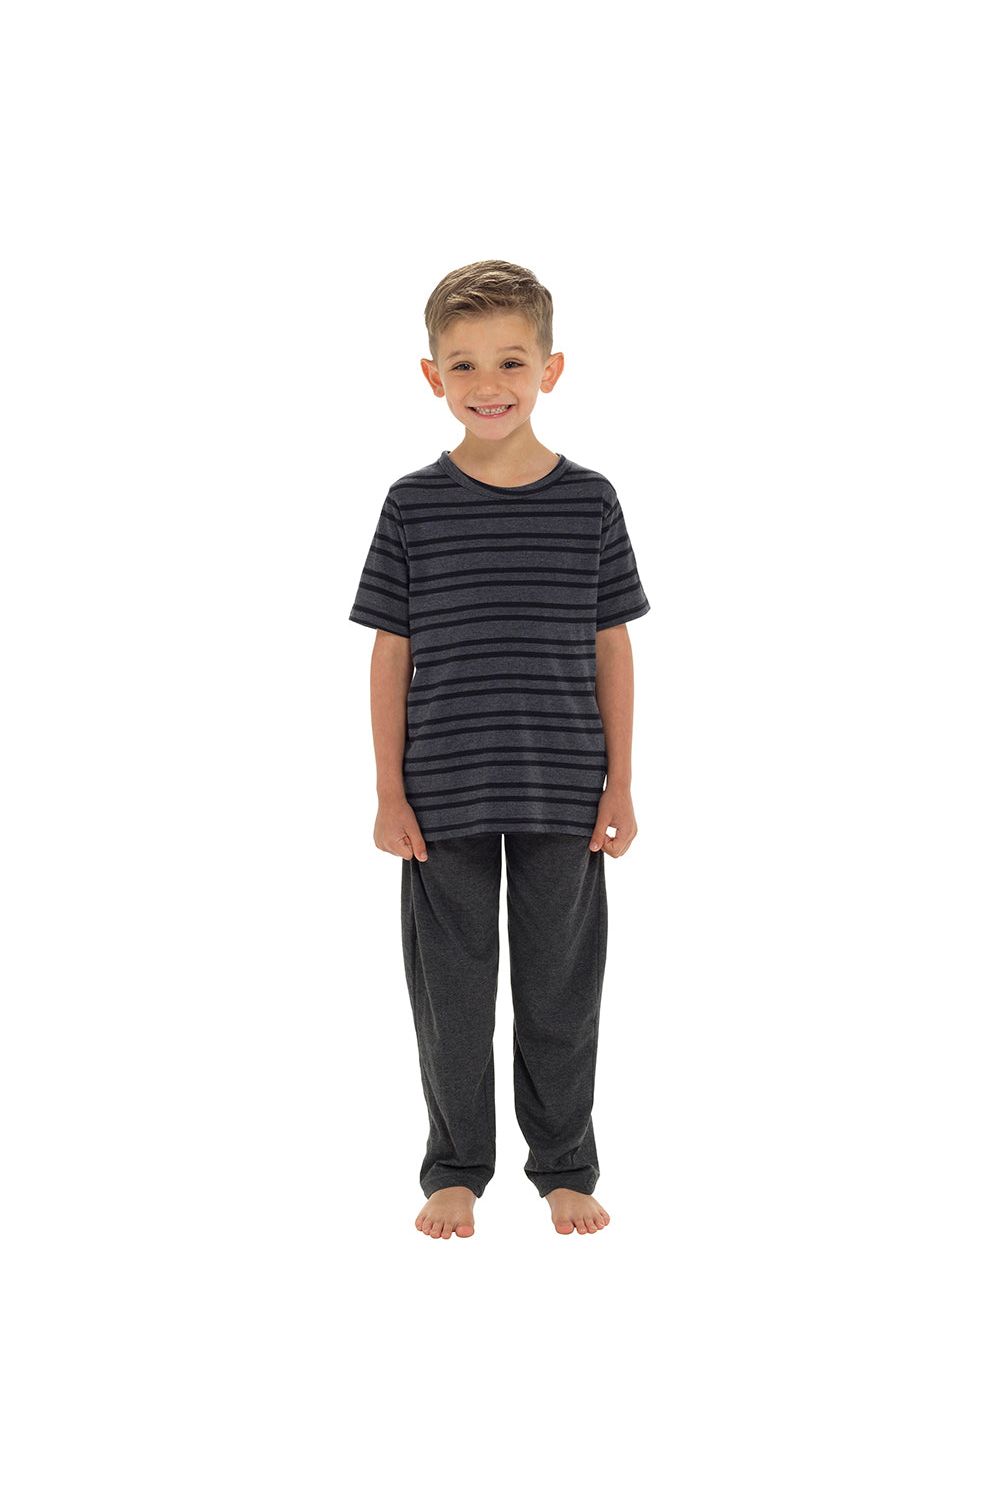 Boys Striped Top Long Leg Pyjama Set Cotton - Pyjamas.com